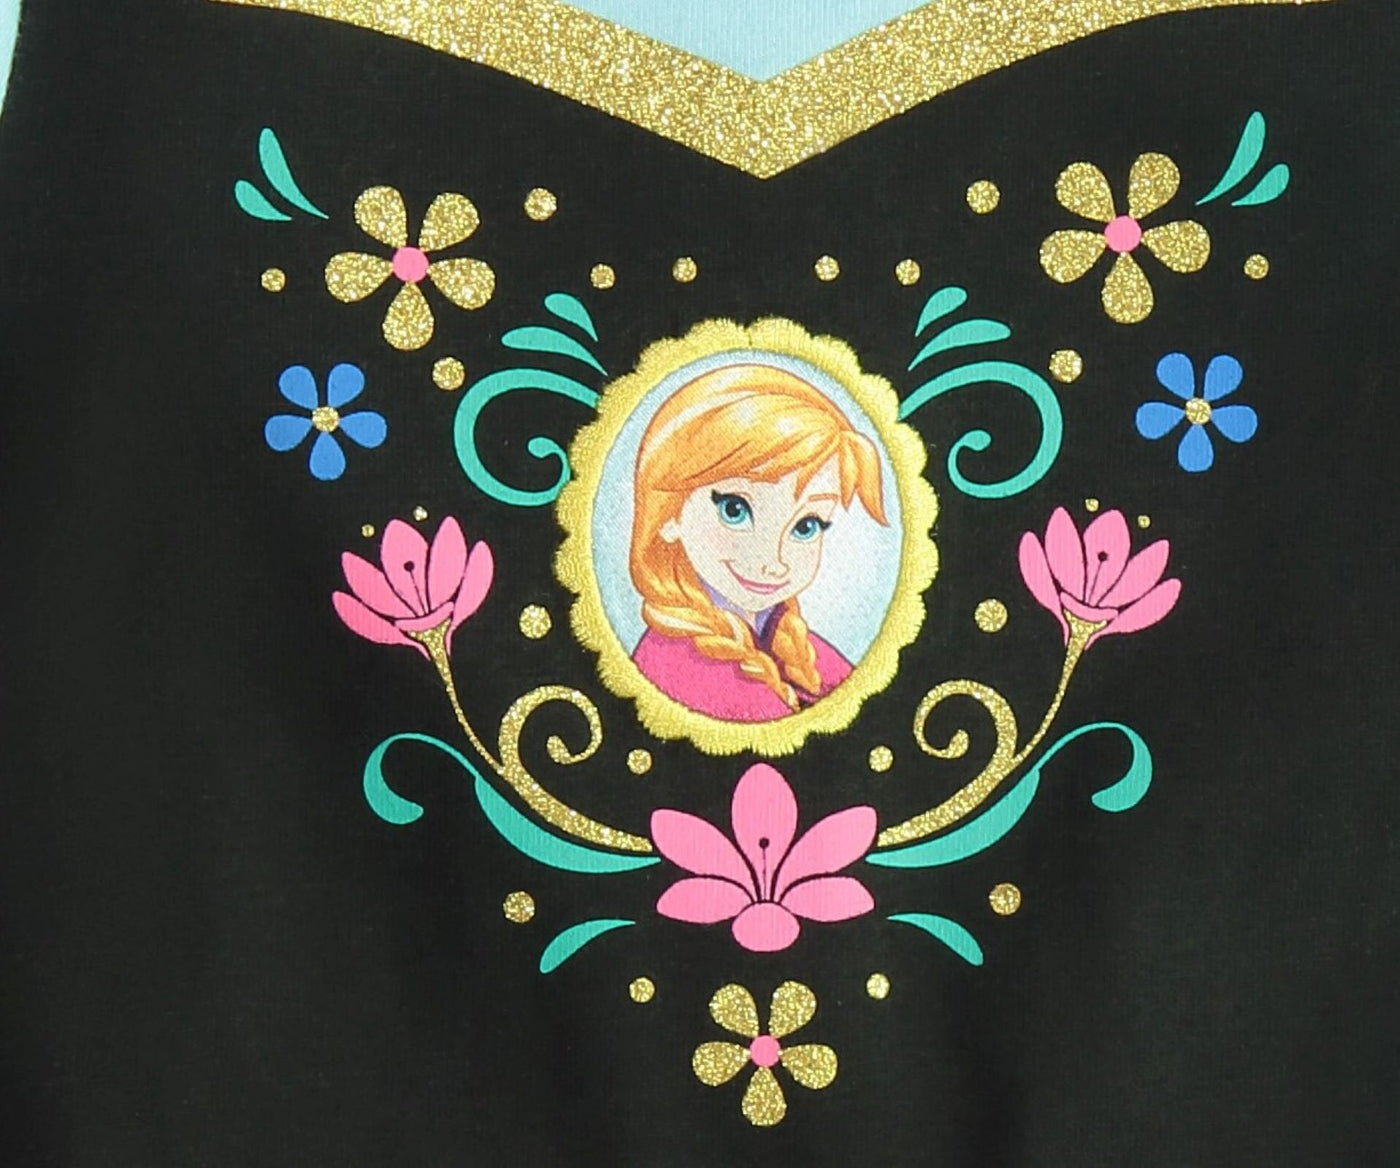 Disney Frozen Princess Anna Fur Dress - imagikids